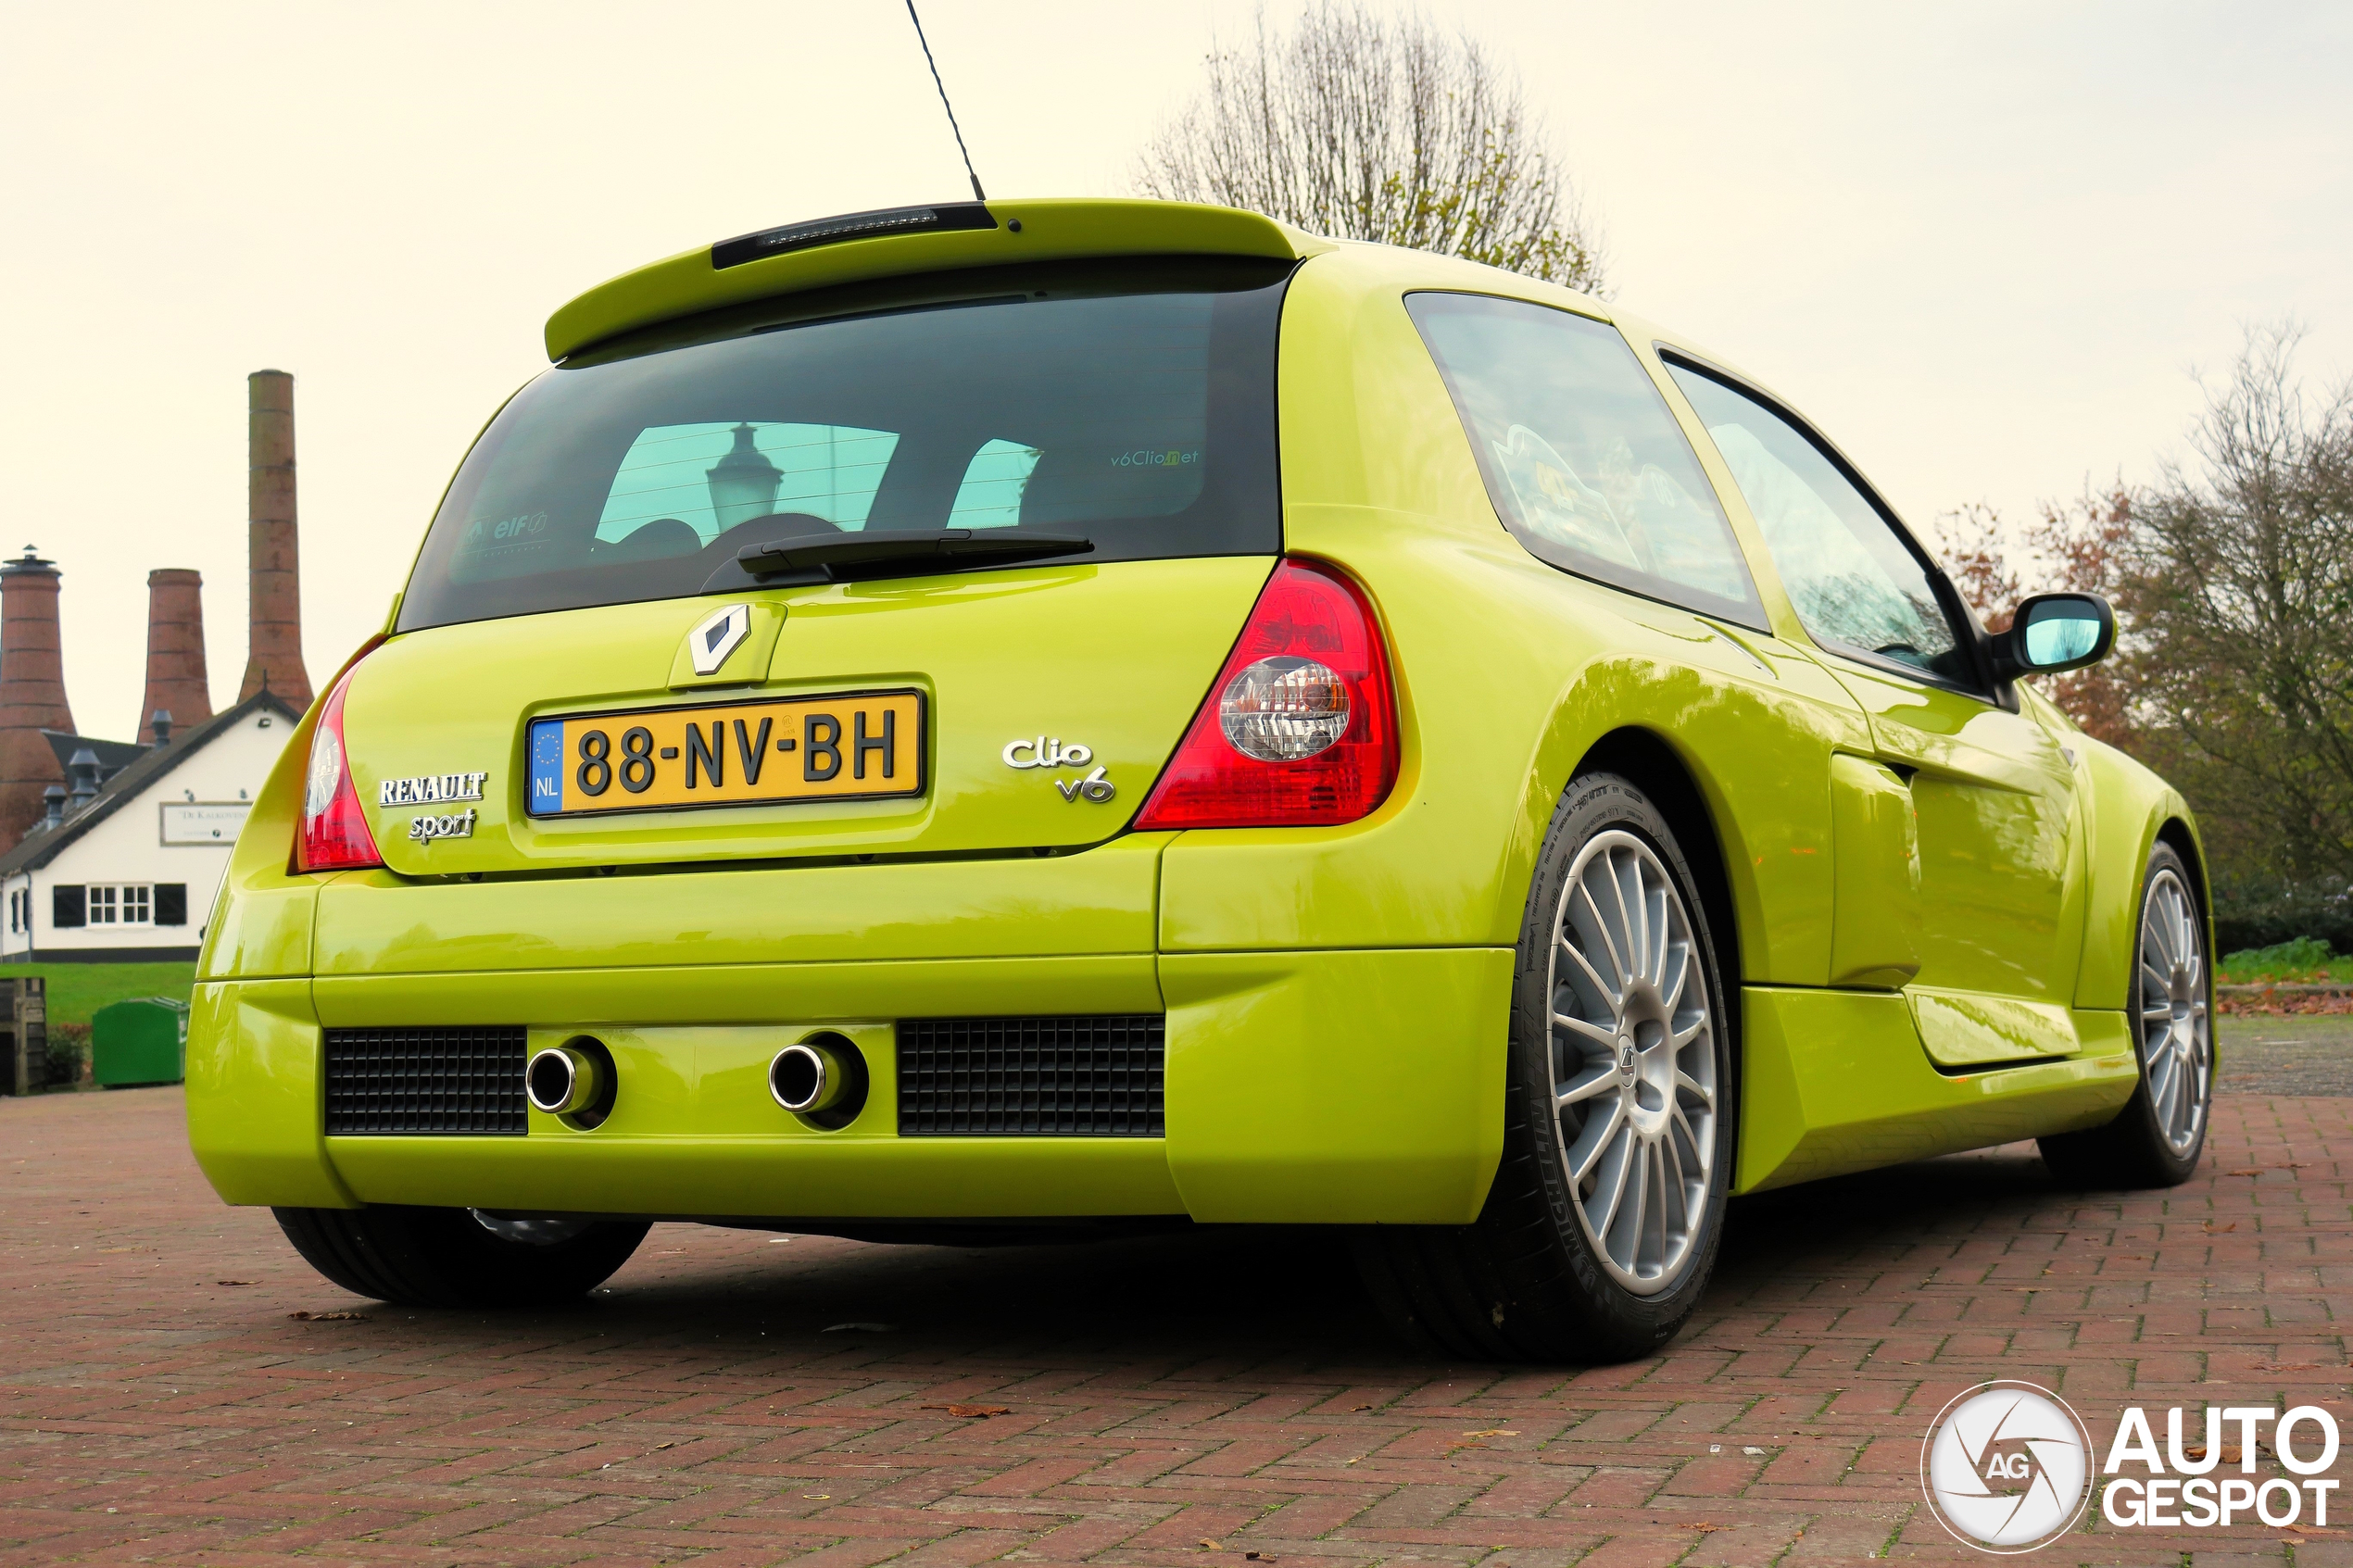 Renault Clio V6 is een extreme hatchback